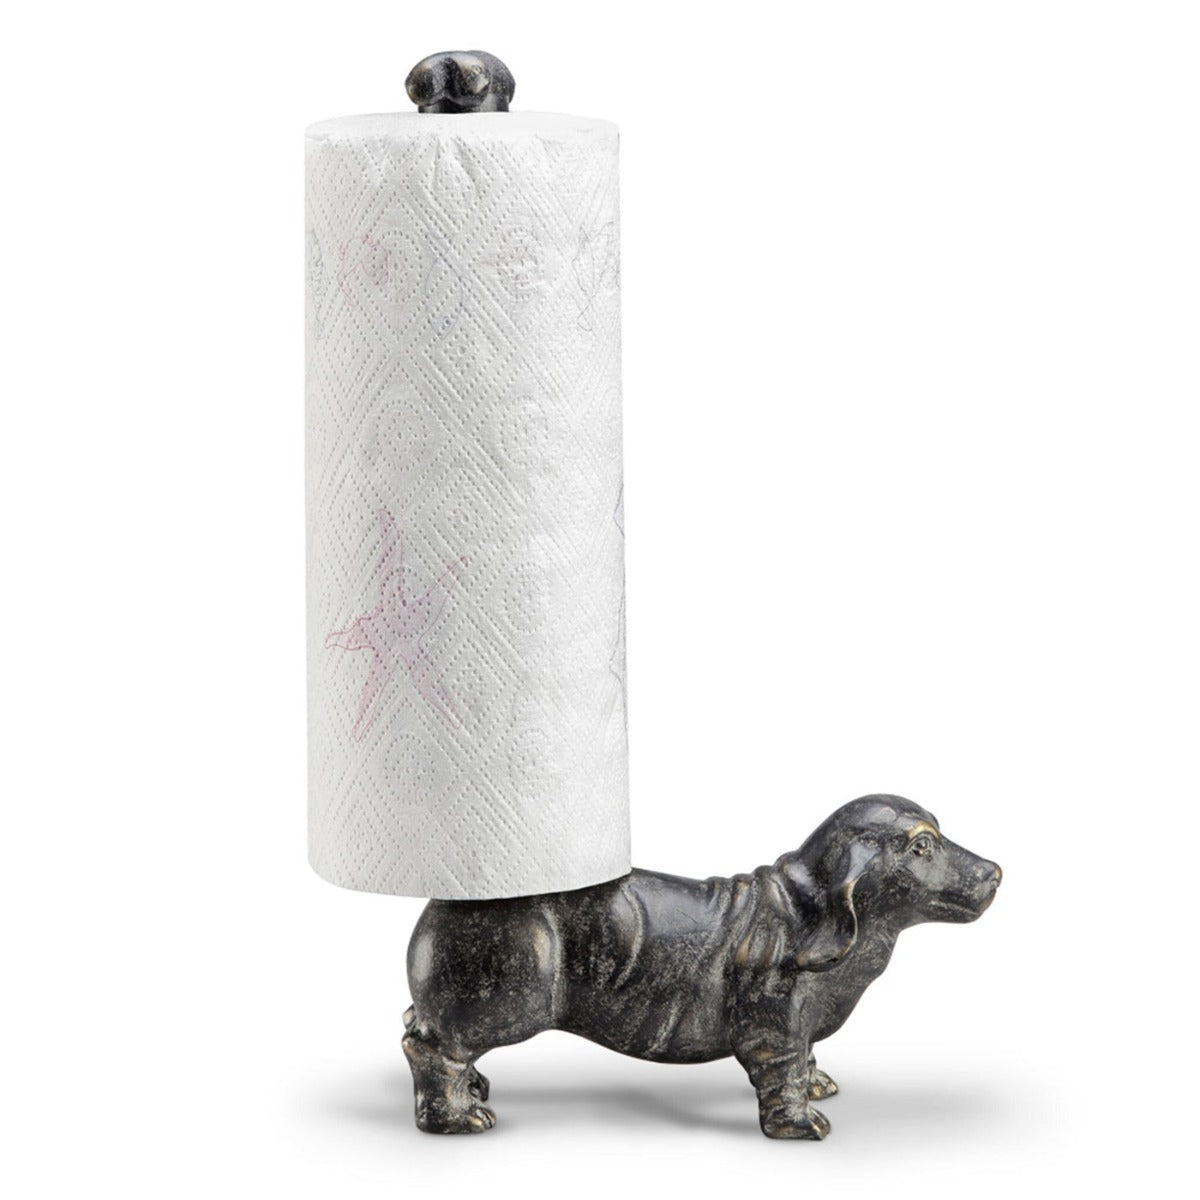 Cast Iron Ostrich Paper Towel Holder